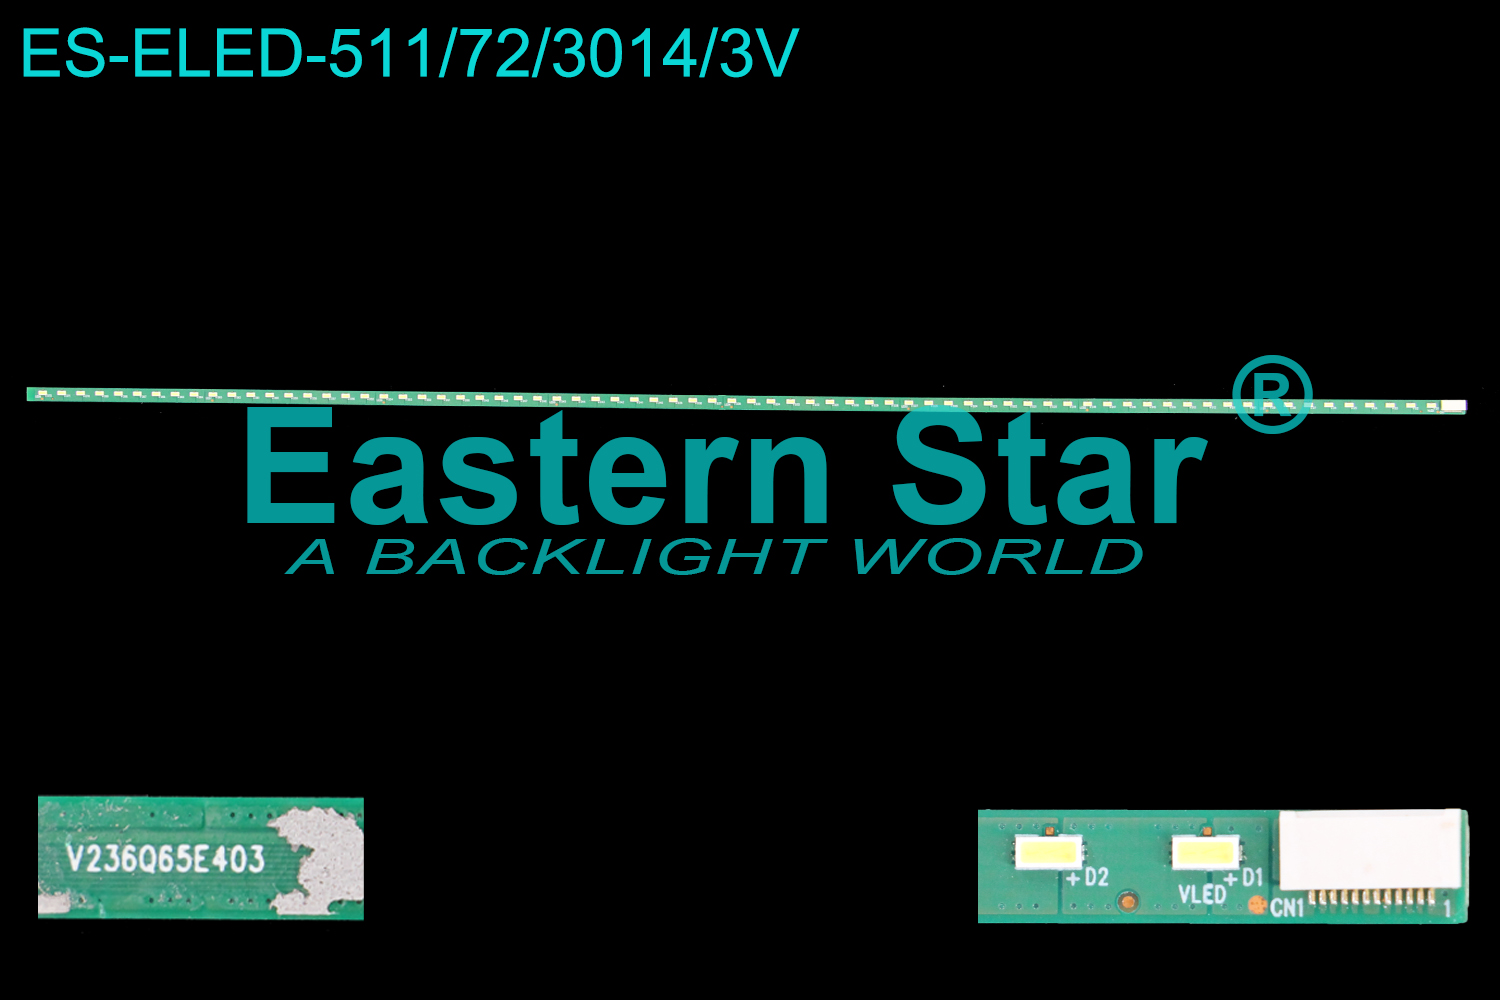 ES-ELED-511 ELED/EDGE TV backlight use for 24'' V236Q65E403 LED STRIPS(1)